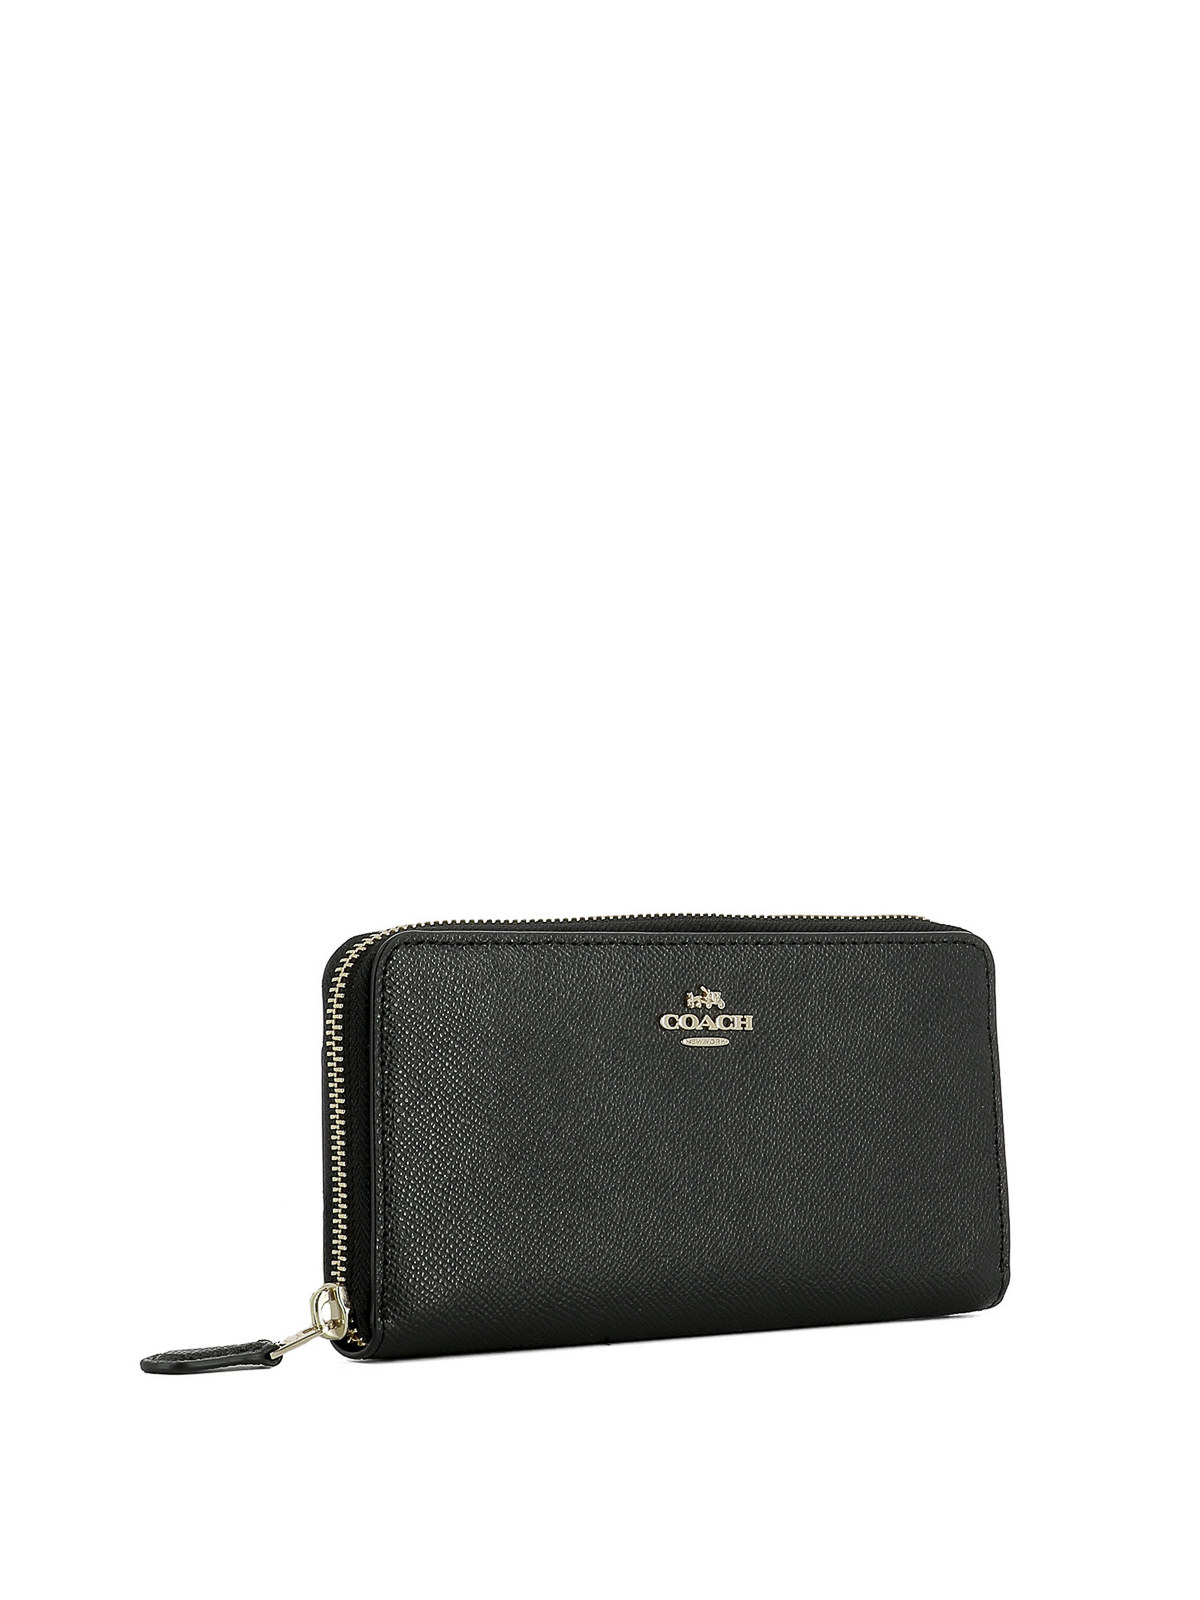 Wallets & purses Coach - Accordion leather zip around wallet - 57713LIBLACK